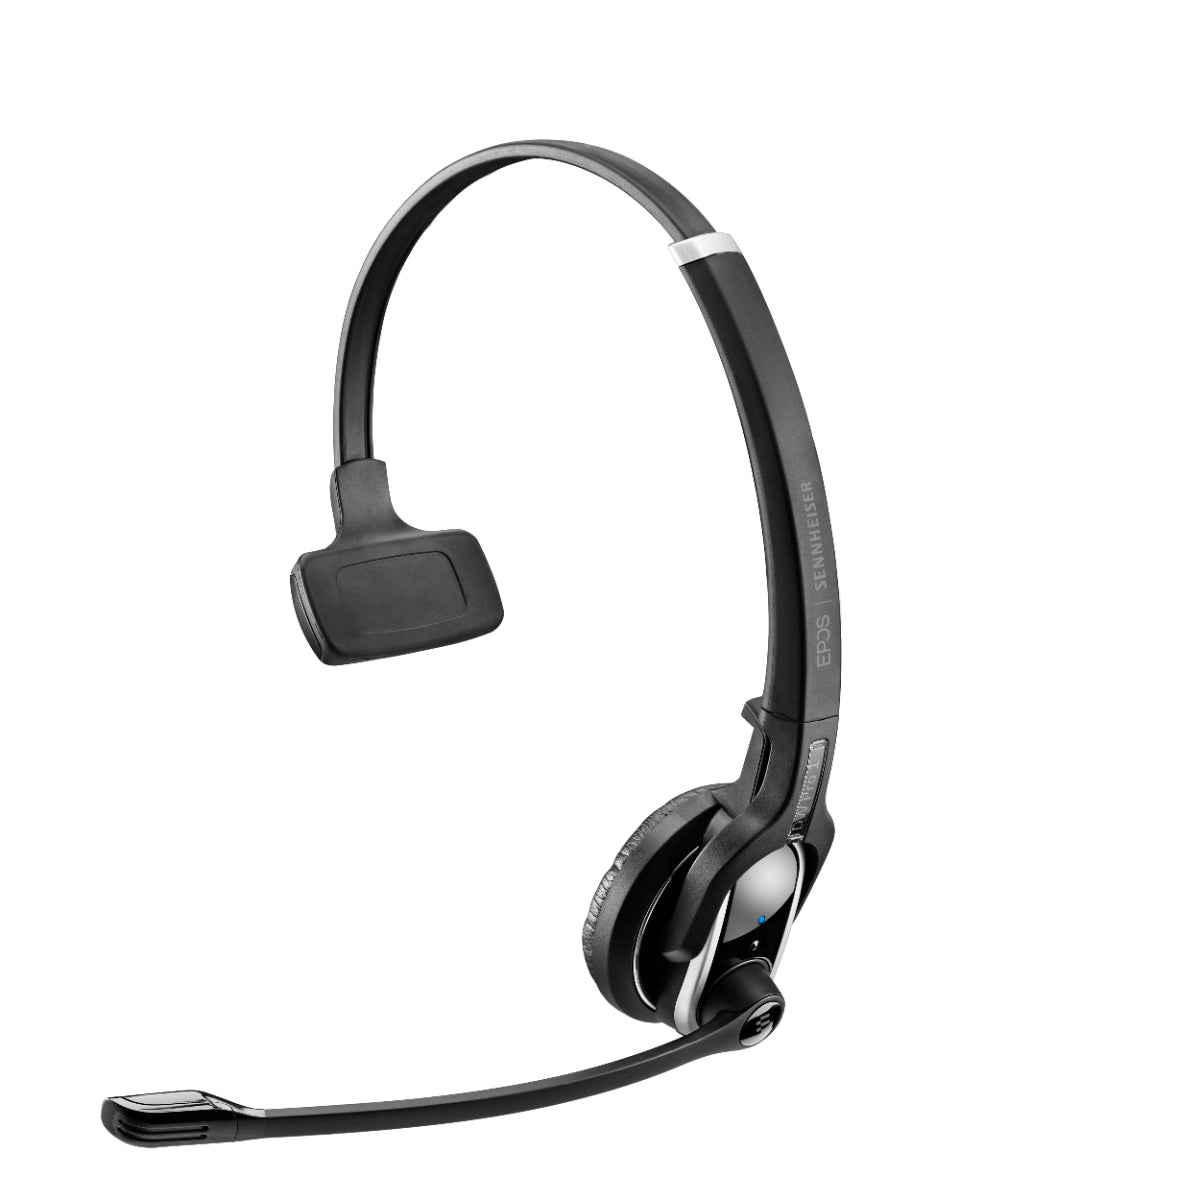 EPOS IMPACT DW Pro 1 HS Wireless Monaural Headset, DW 20 HS Pro 1, Black-Silver